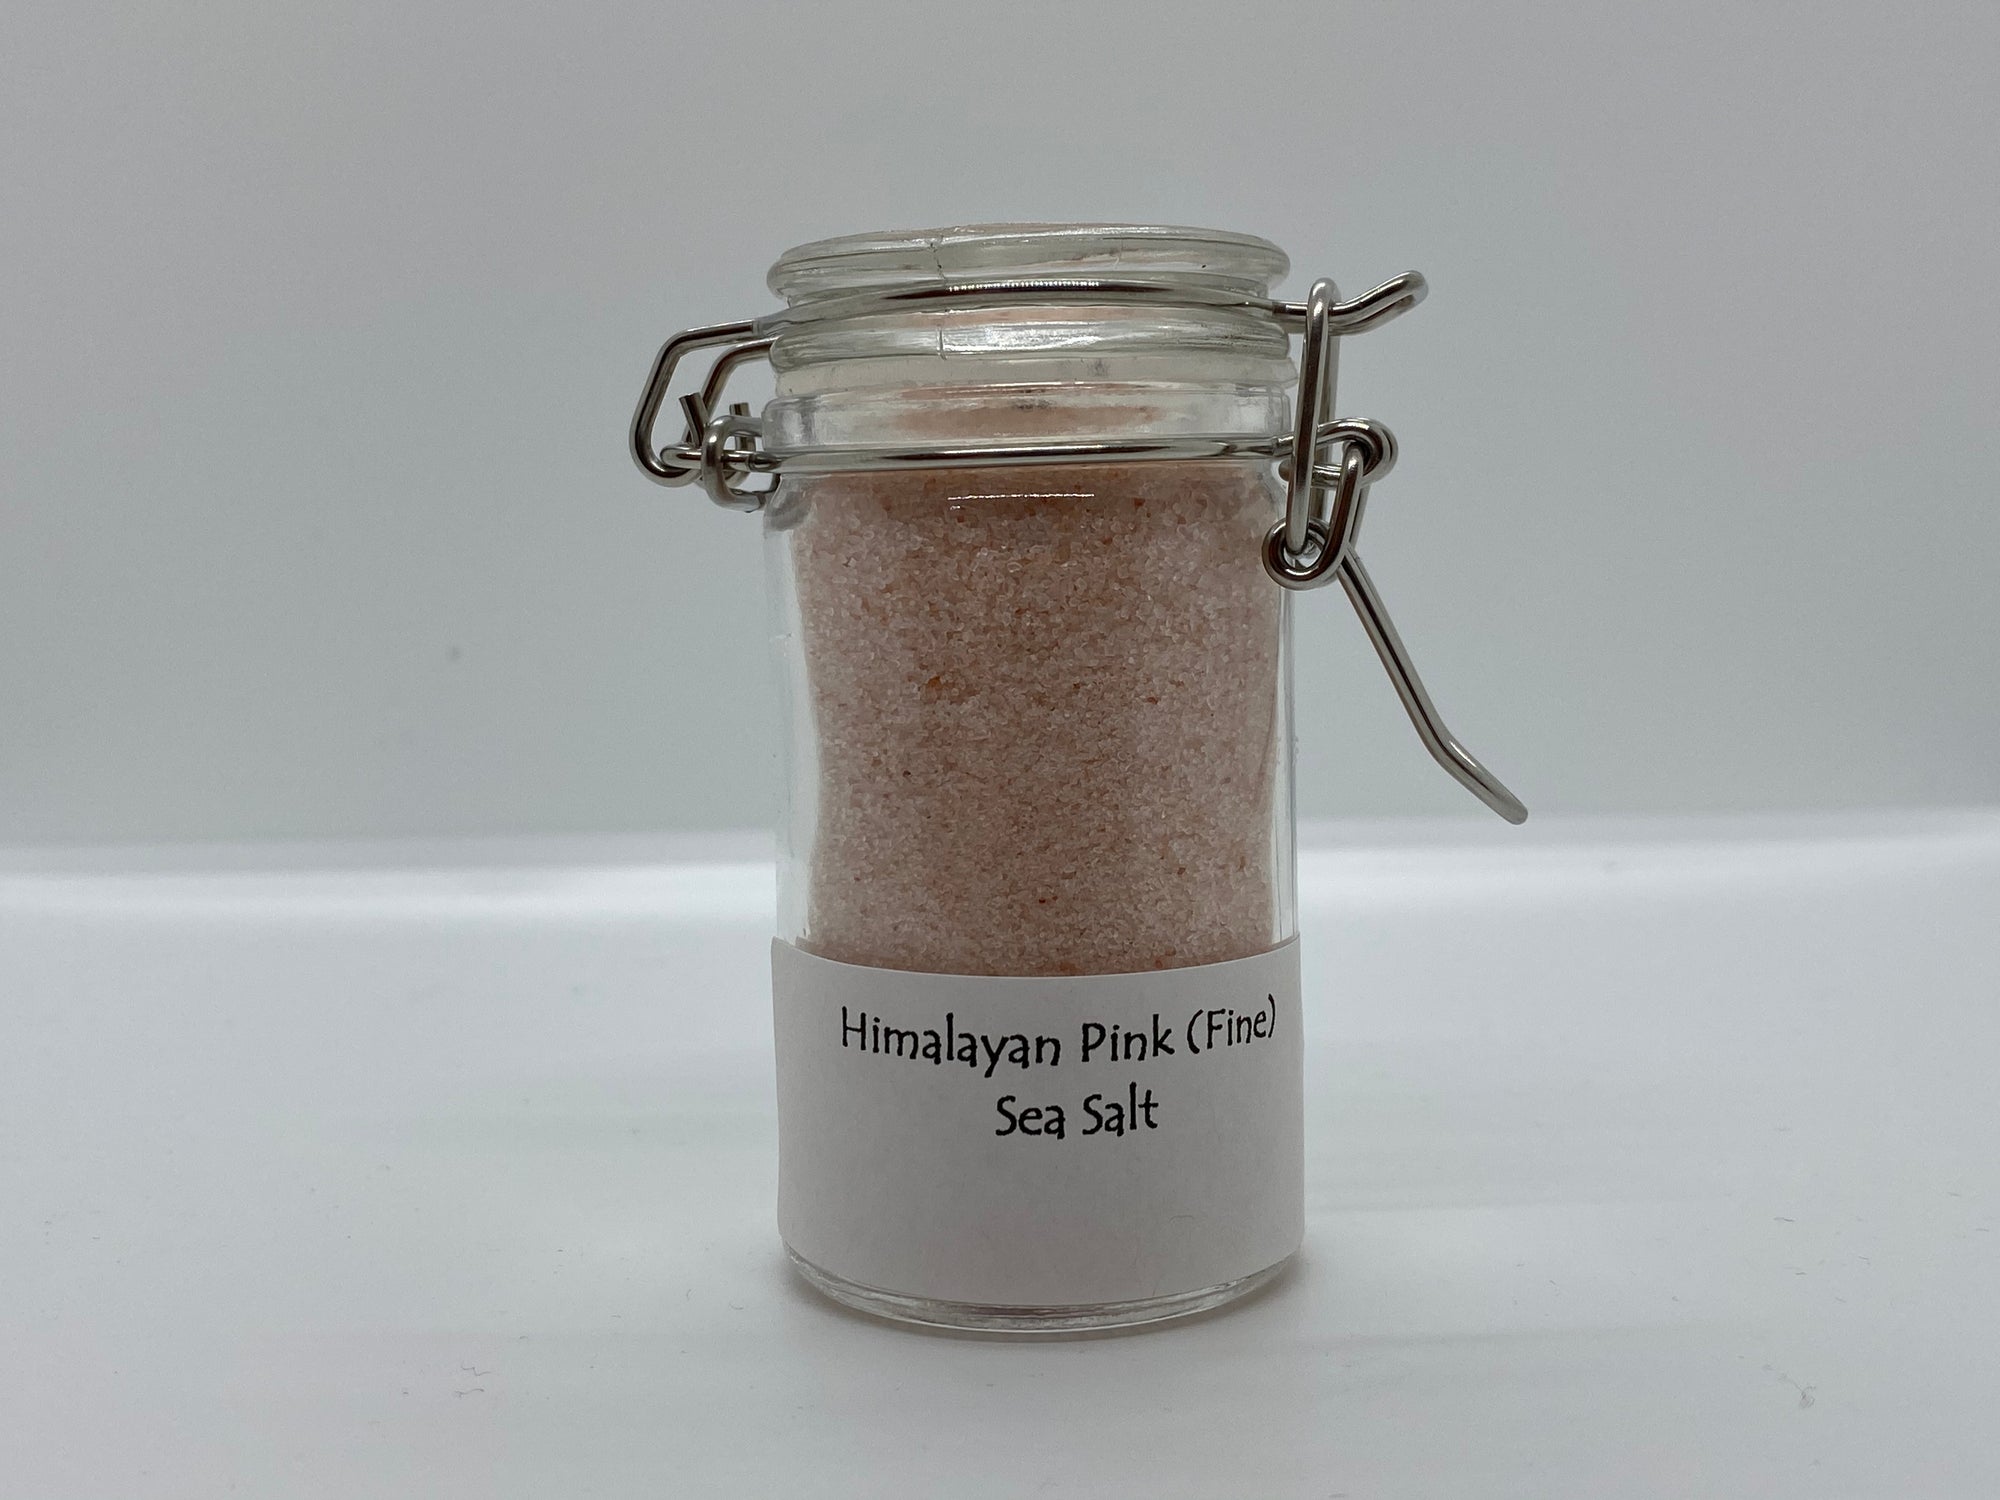 Himalayan Pink (Fine) Sea Salt